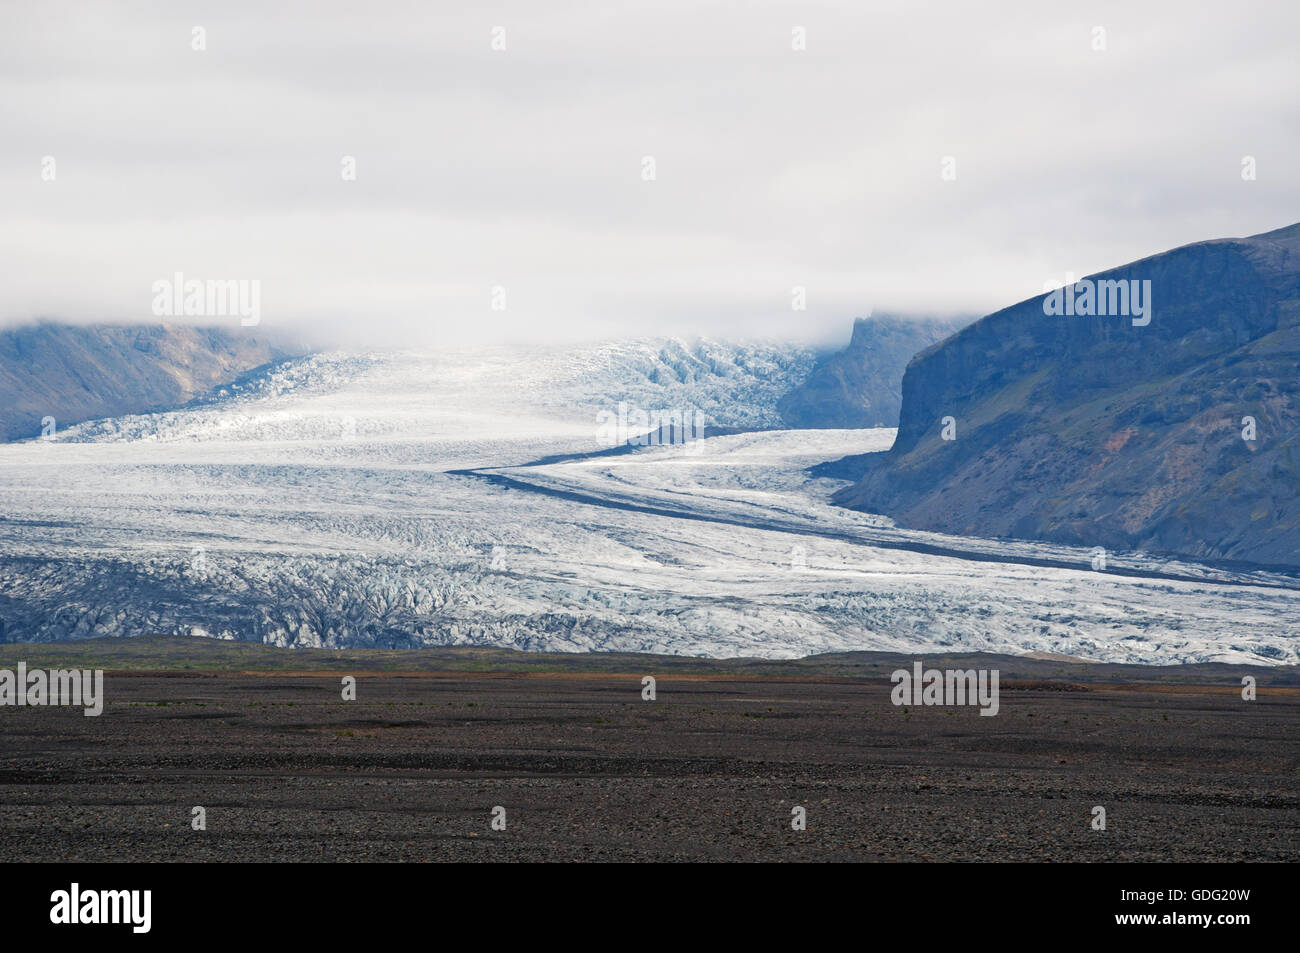 Iceland: view of the Skaftafellsjokull, the Skaftafell Glacier, a spur of the Vatnajokull ice cap Stock Photo